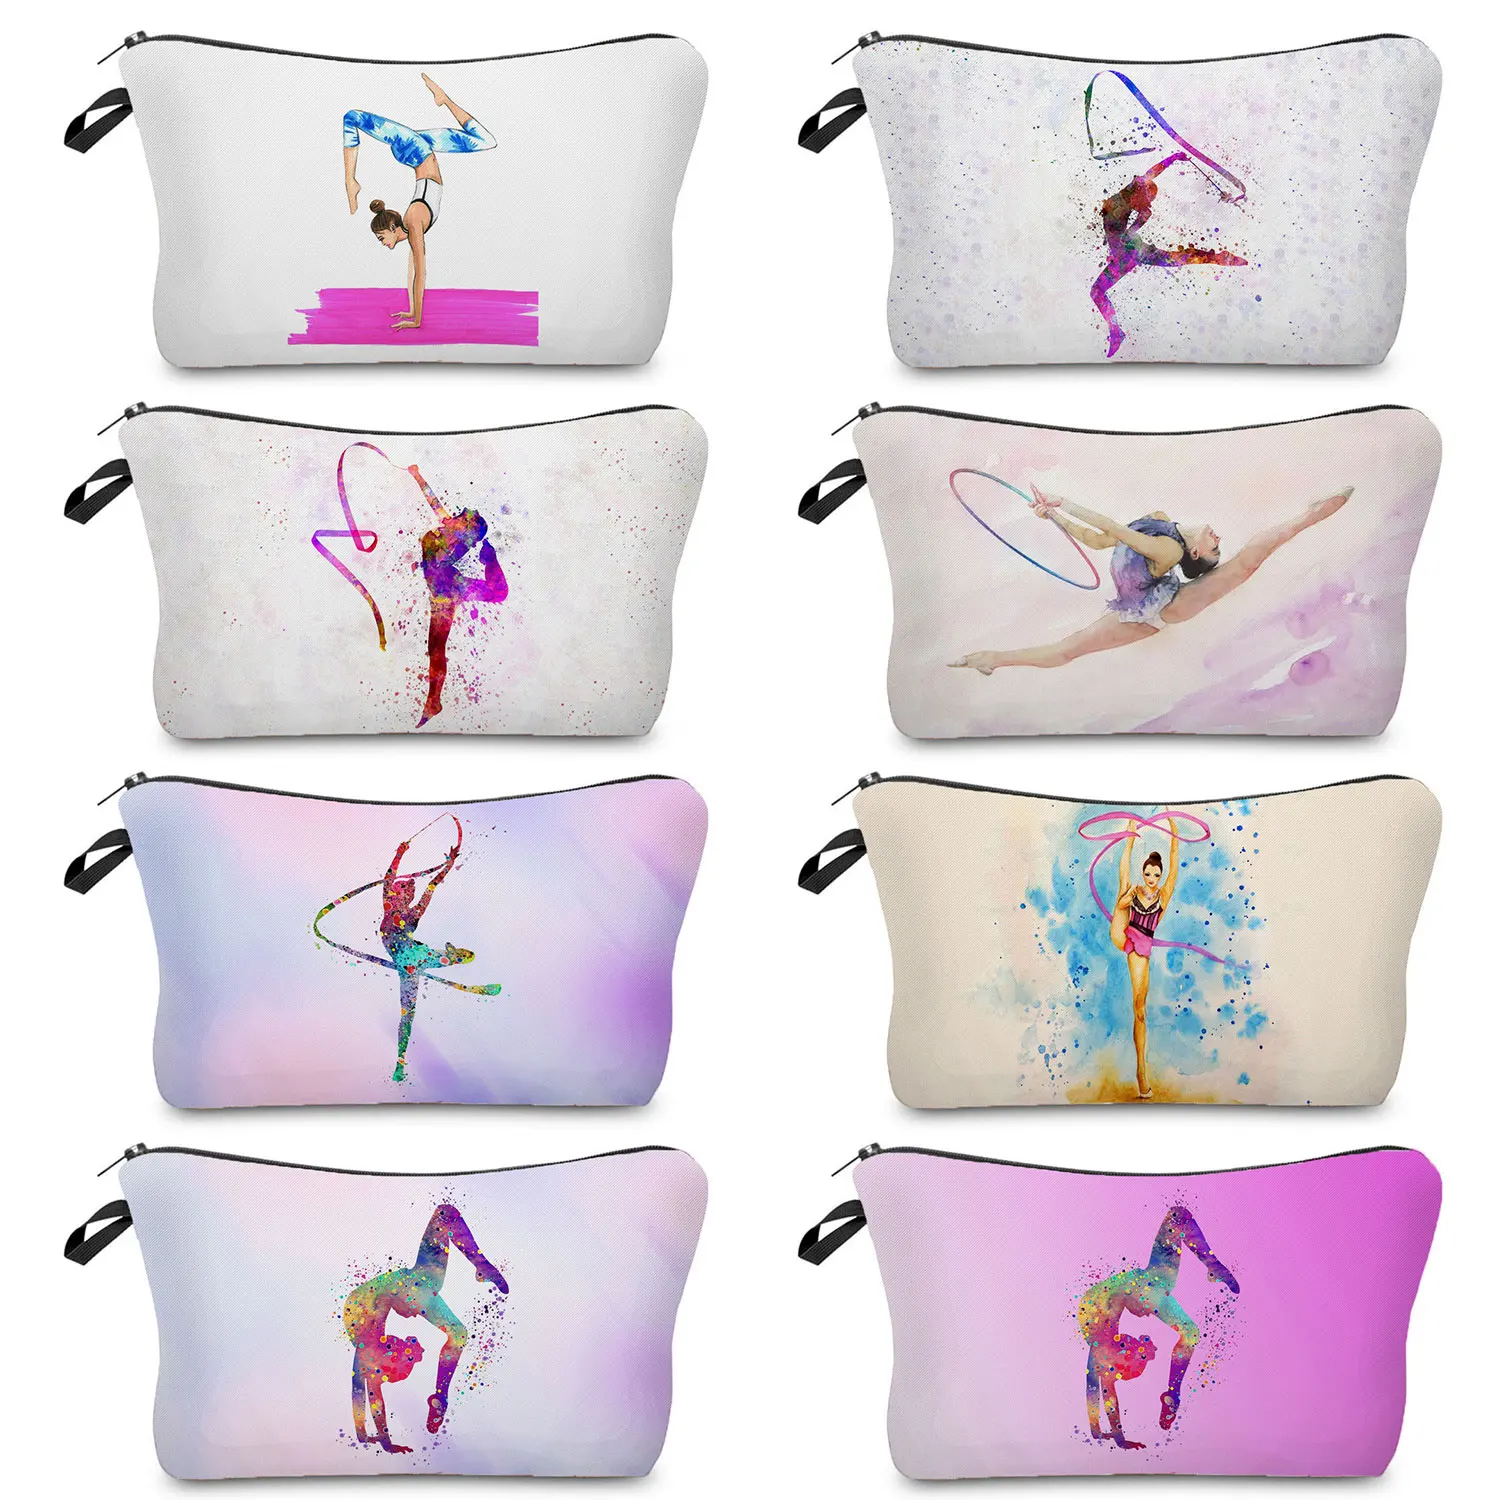 

Rhythmic Gymnastics Women's Cosmetic Bag Makeup Bags Ballet Dancer Girls Lipstick Cosmetic Holder Beauty Travel Toiletry Bag